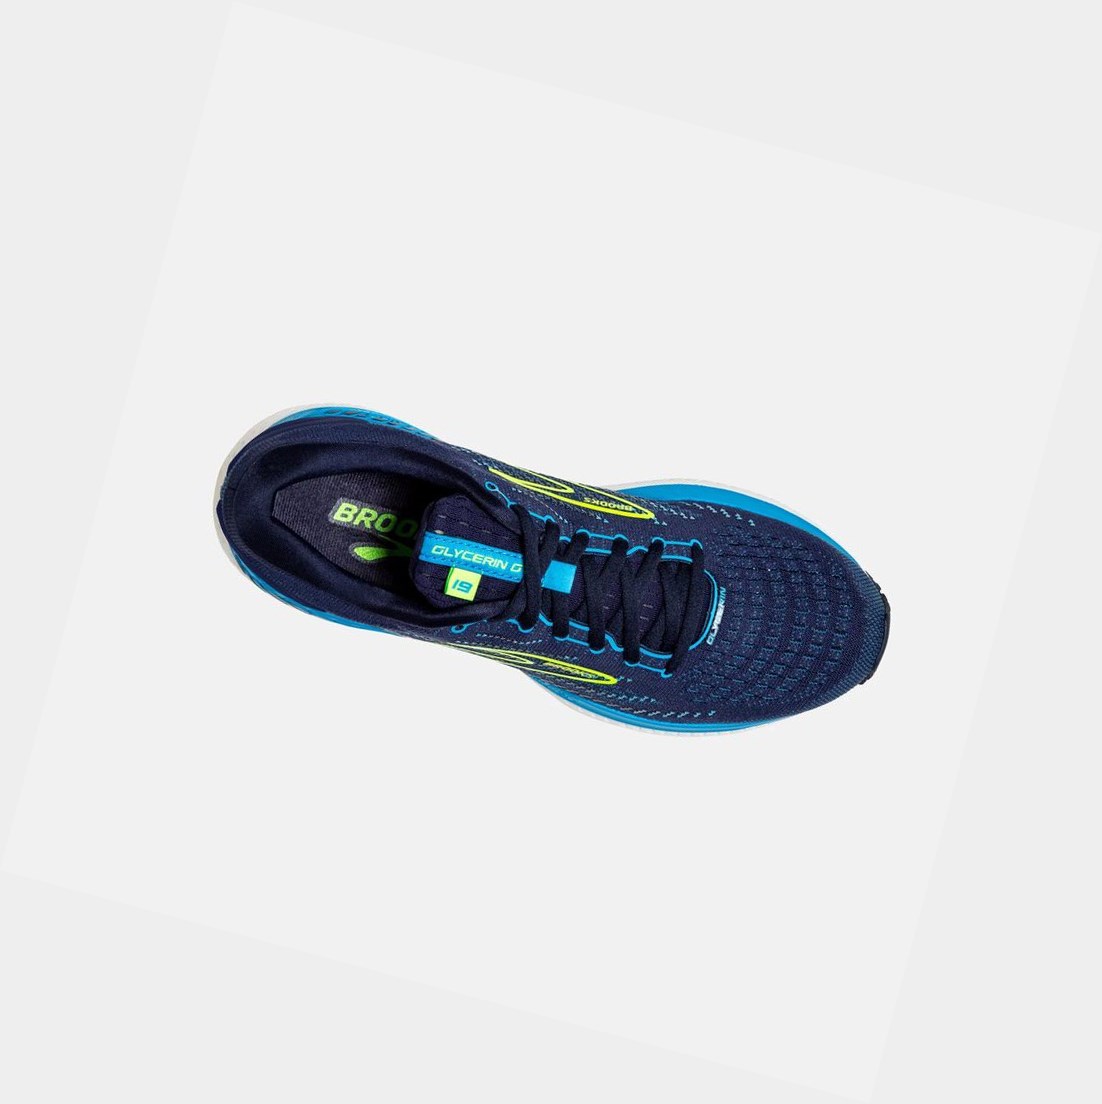 Brooks Glycerin GTS 19 Men's Road Running Shoes Navy / Blue / Nightlife | WDGM-93842